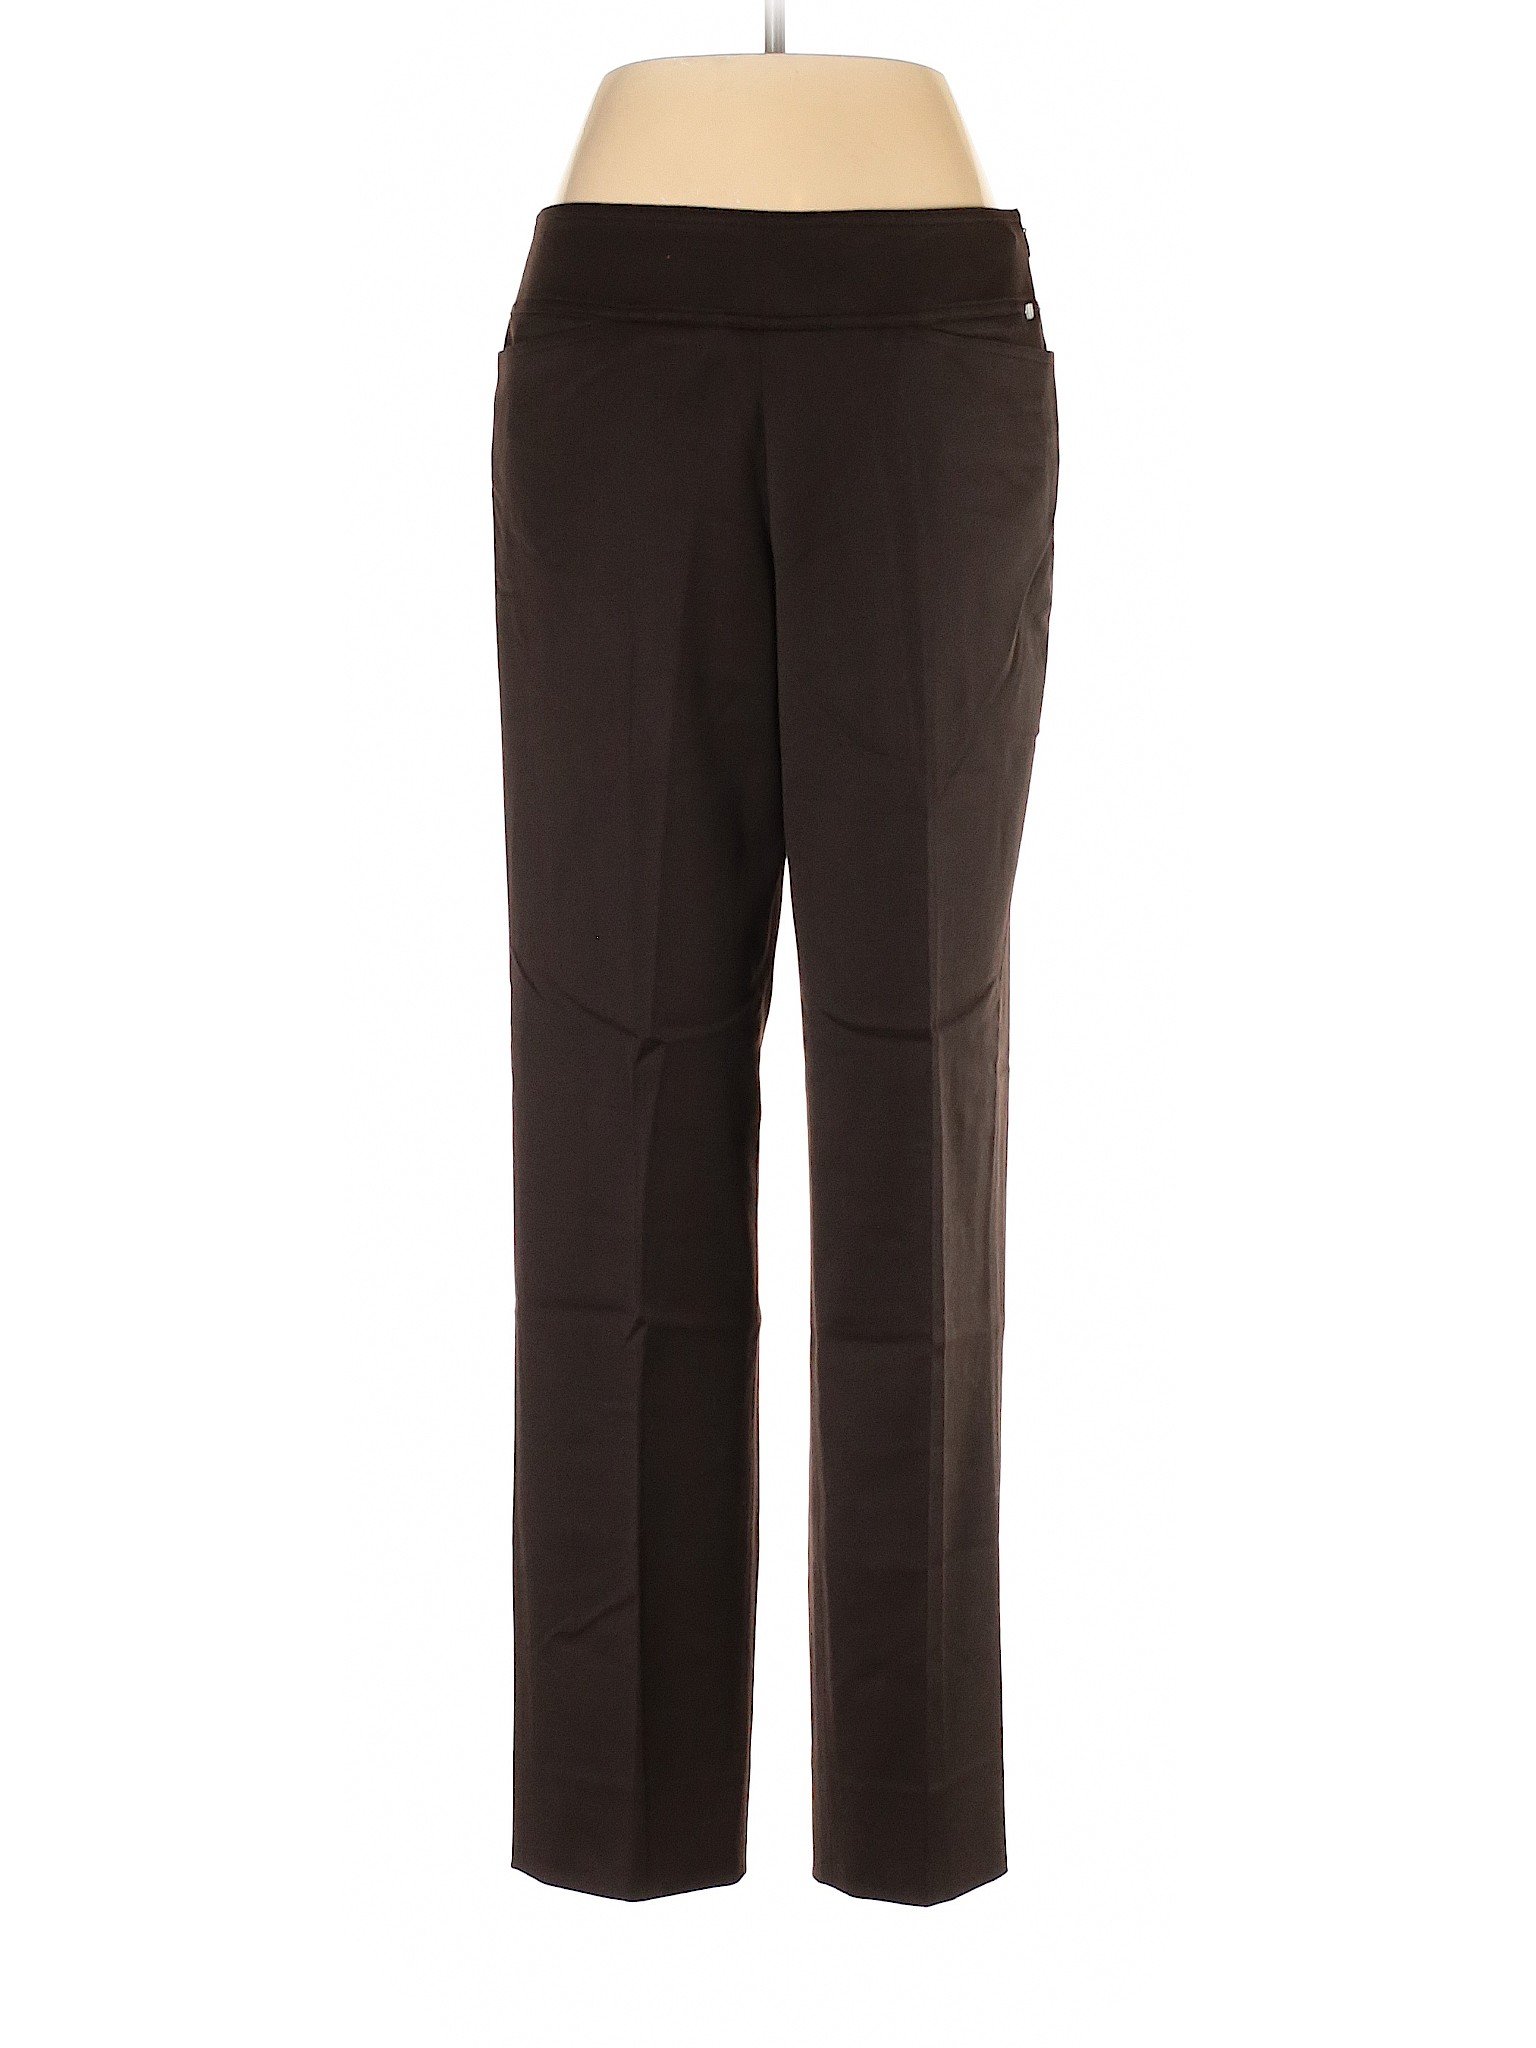 Talbots Women Black Wool Pants 6 | eBay